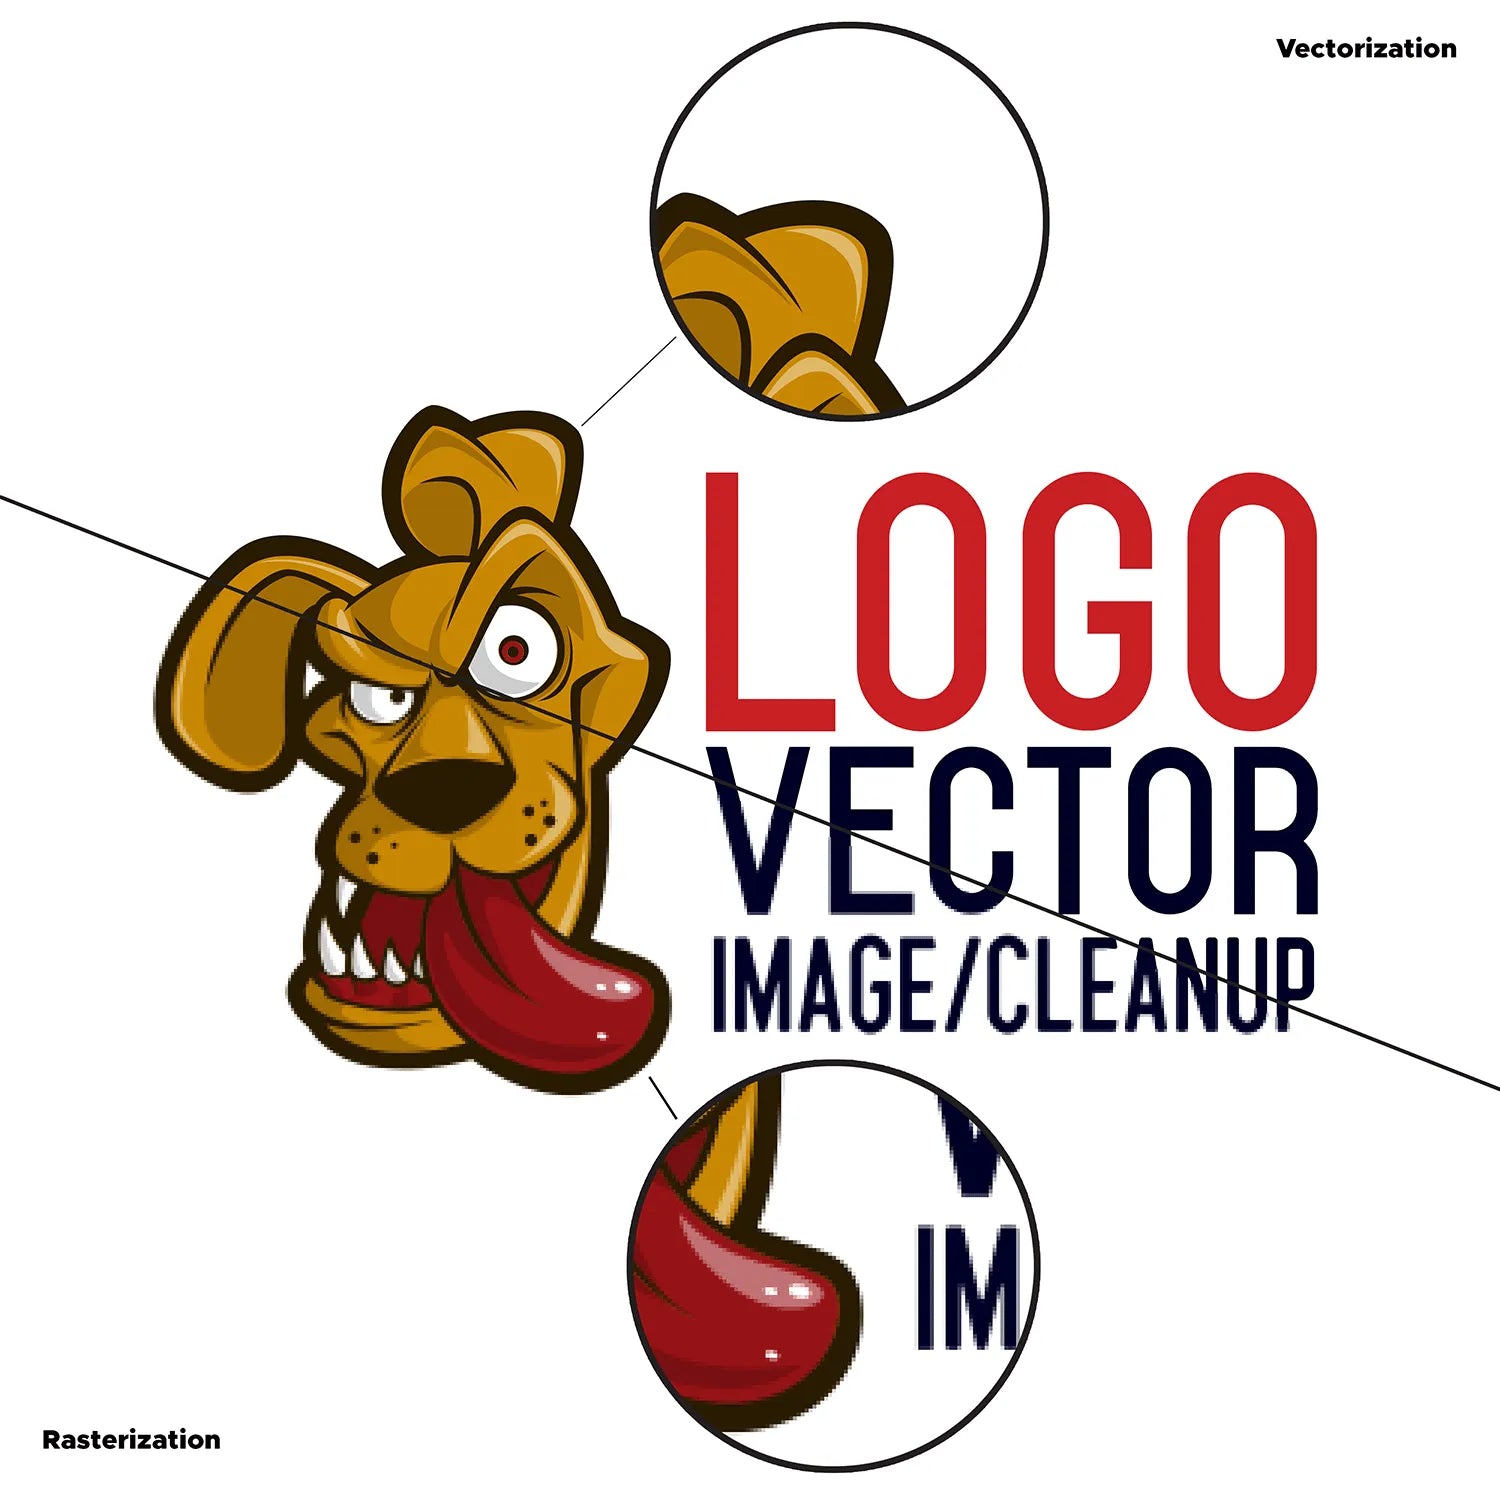 Vectoring / Image Clean Up - Print Me Shirts